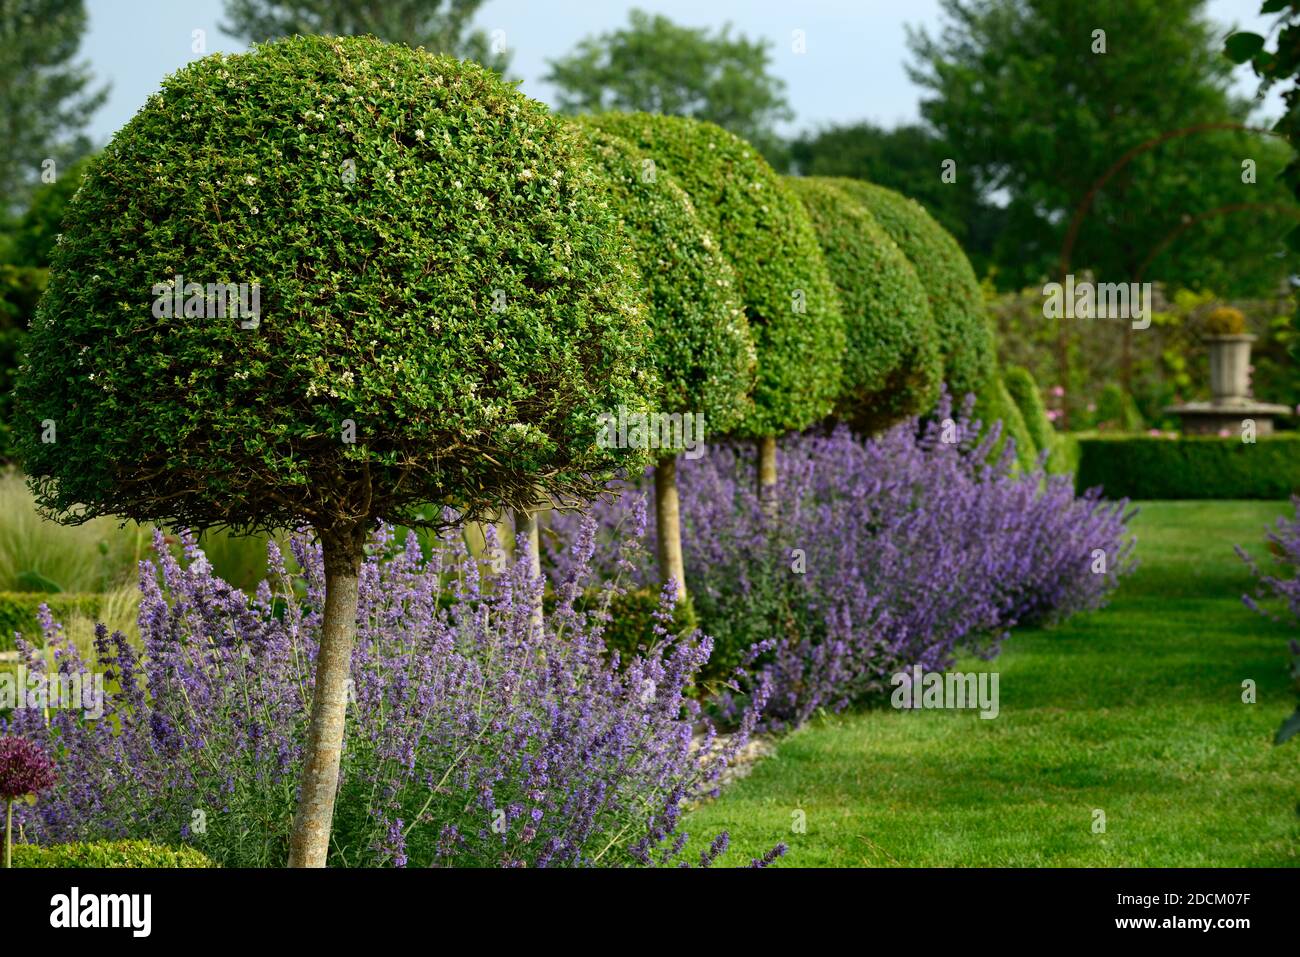 Nepeta six hills giant,Catnip,Catmint,violet,blue,flower,formal garden,box hedge,box hedging,topiary,hedging,catnip hedge,garden design,garden,gardens Stock Photo